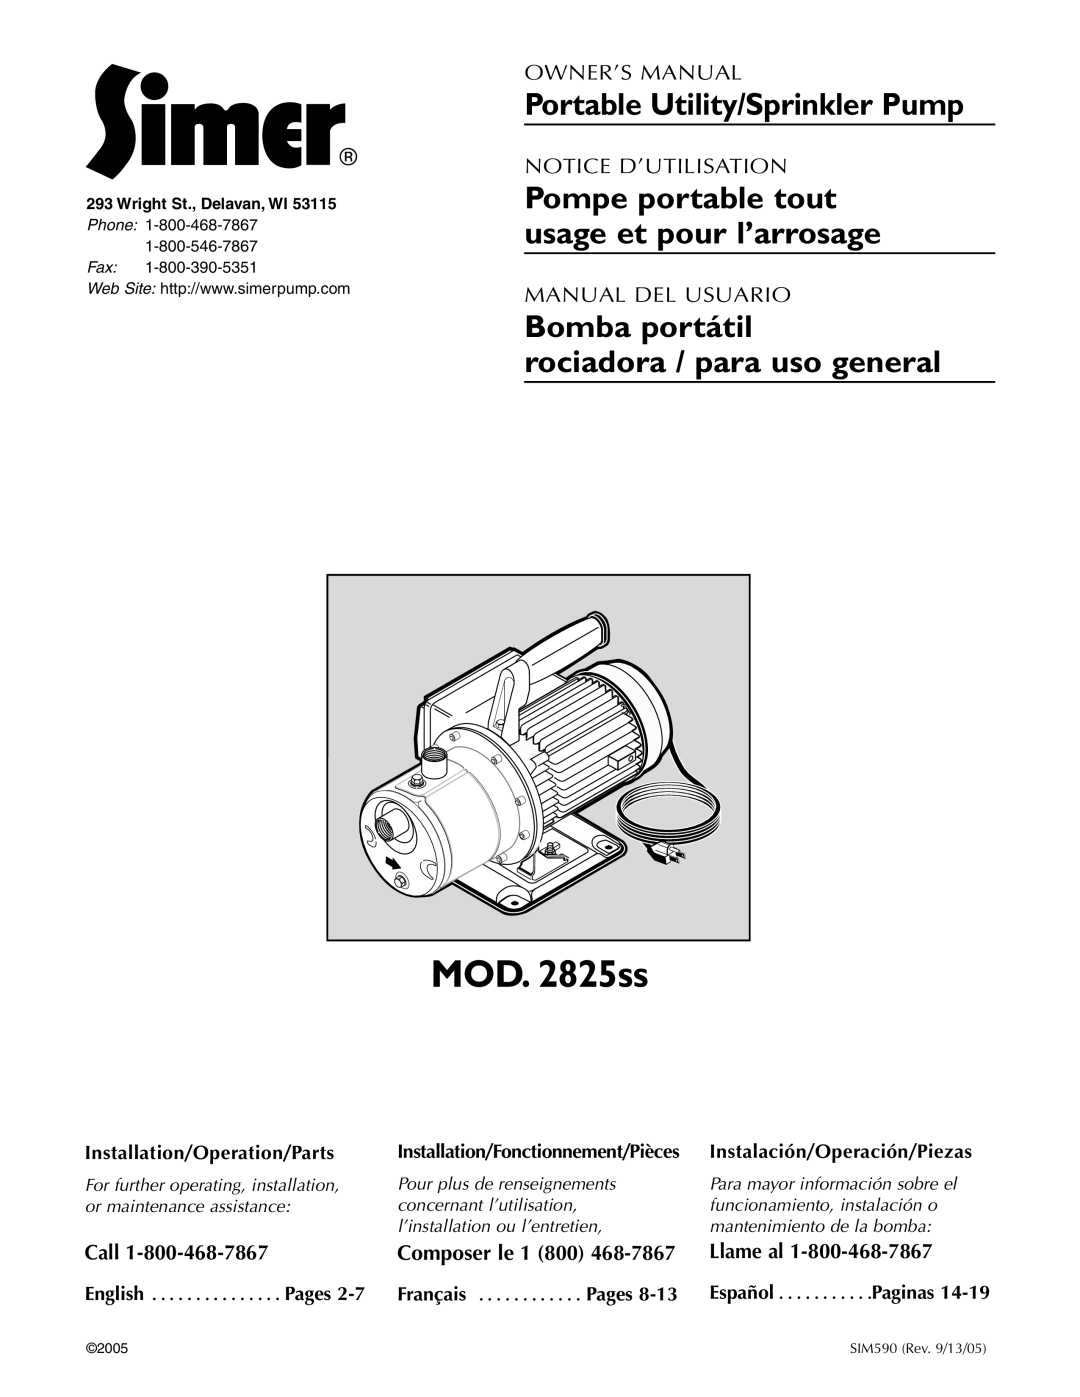 Simer Pumps 2825SS owner manual Portable Utility/Sprinkler Pump, Bomba portátil rociadora / para uso general, Call, Pages 